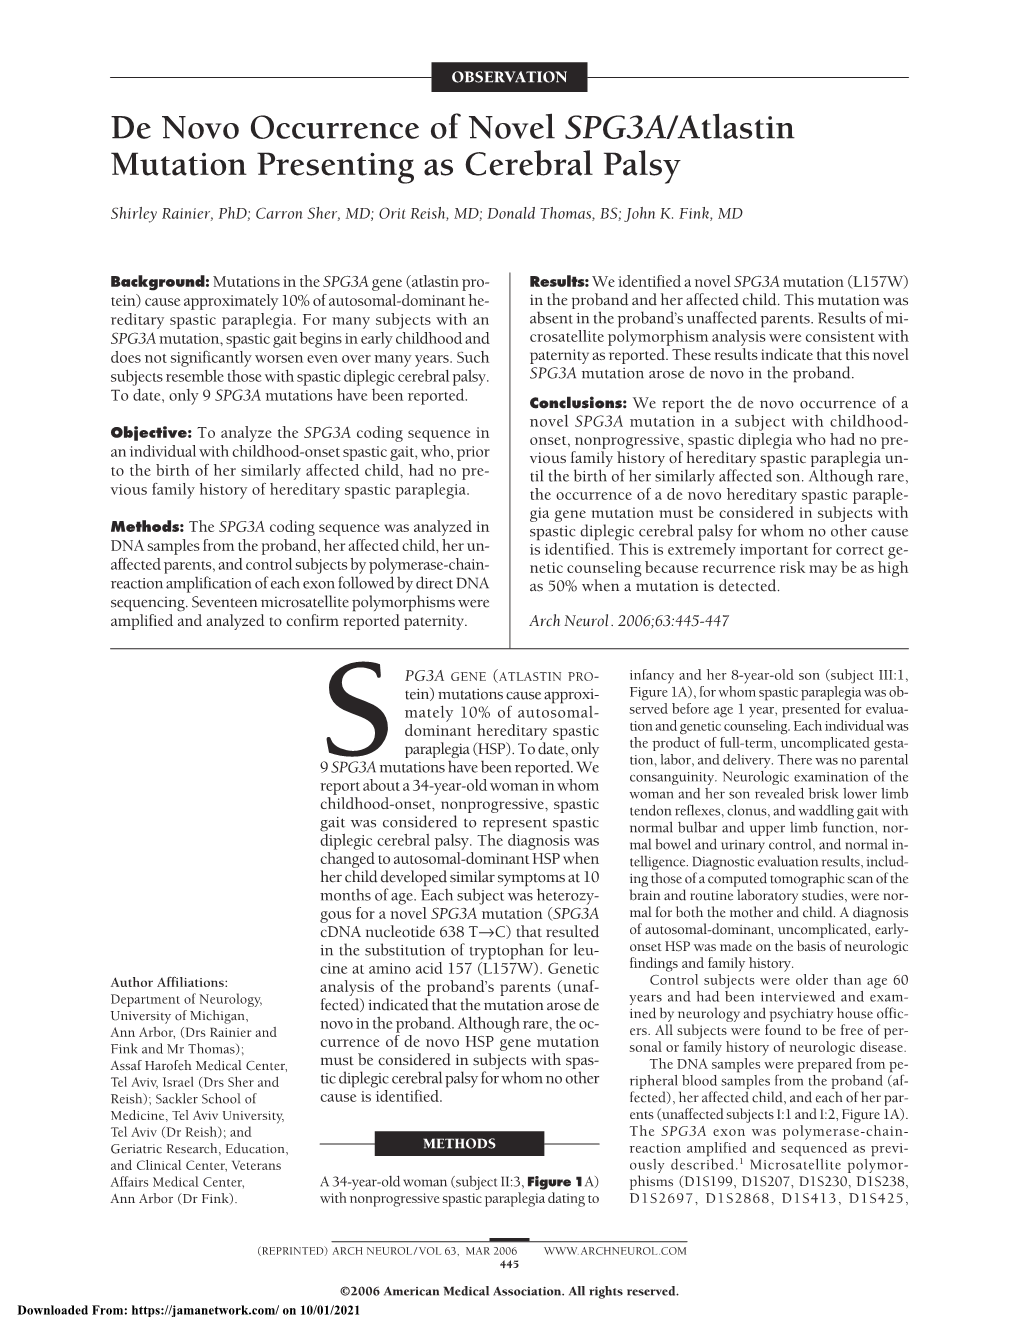 De Novo Occurrence of Novel SPG3A/Atlastin Mutation Presenting As Cerebral Palsy